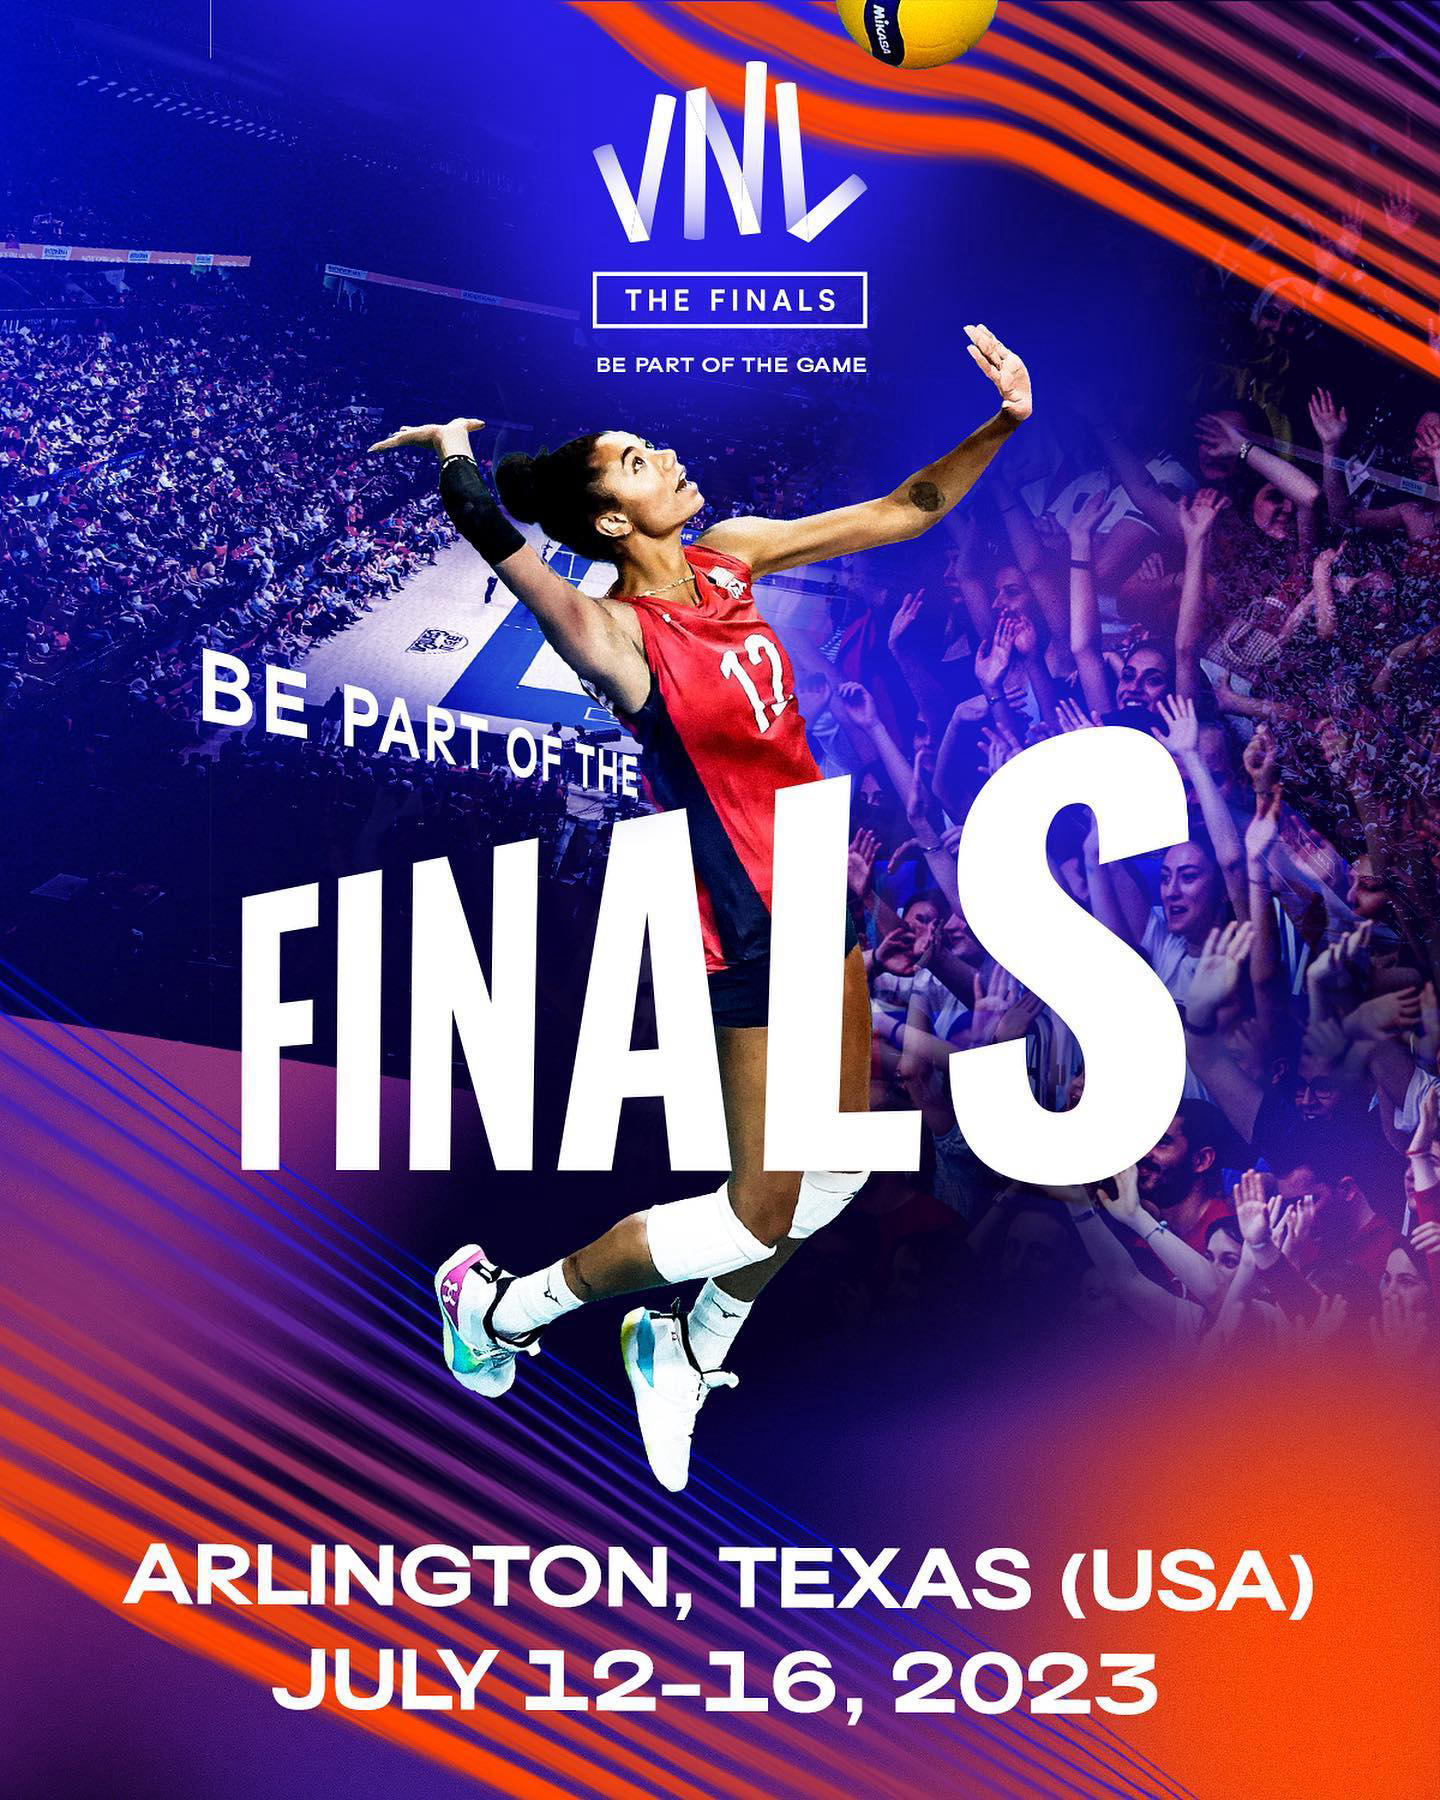 Volleyball World - 2023 Women’s #VNLFinals in the USA 🇺🇸